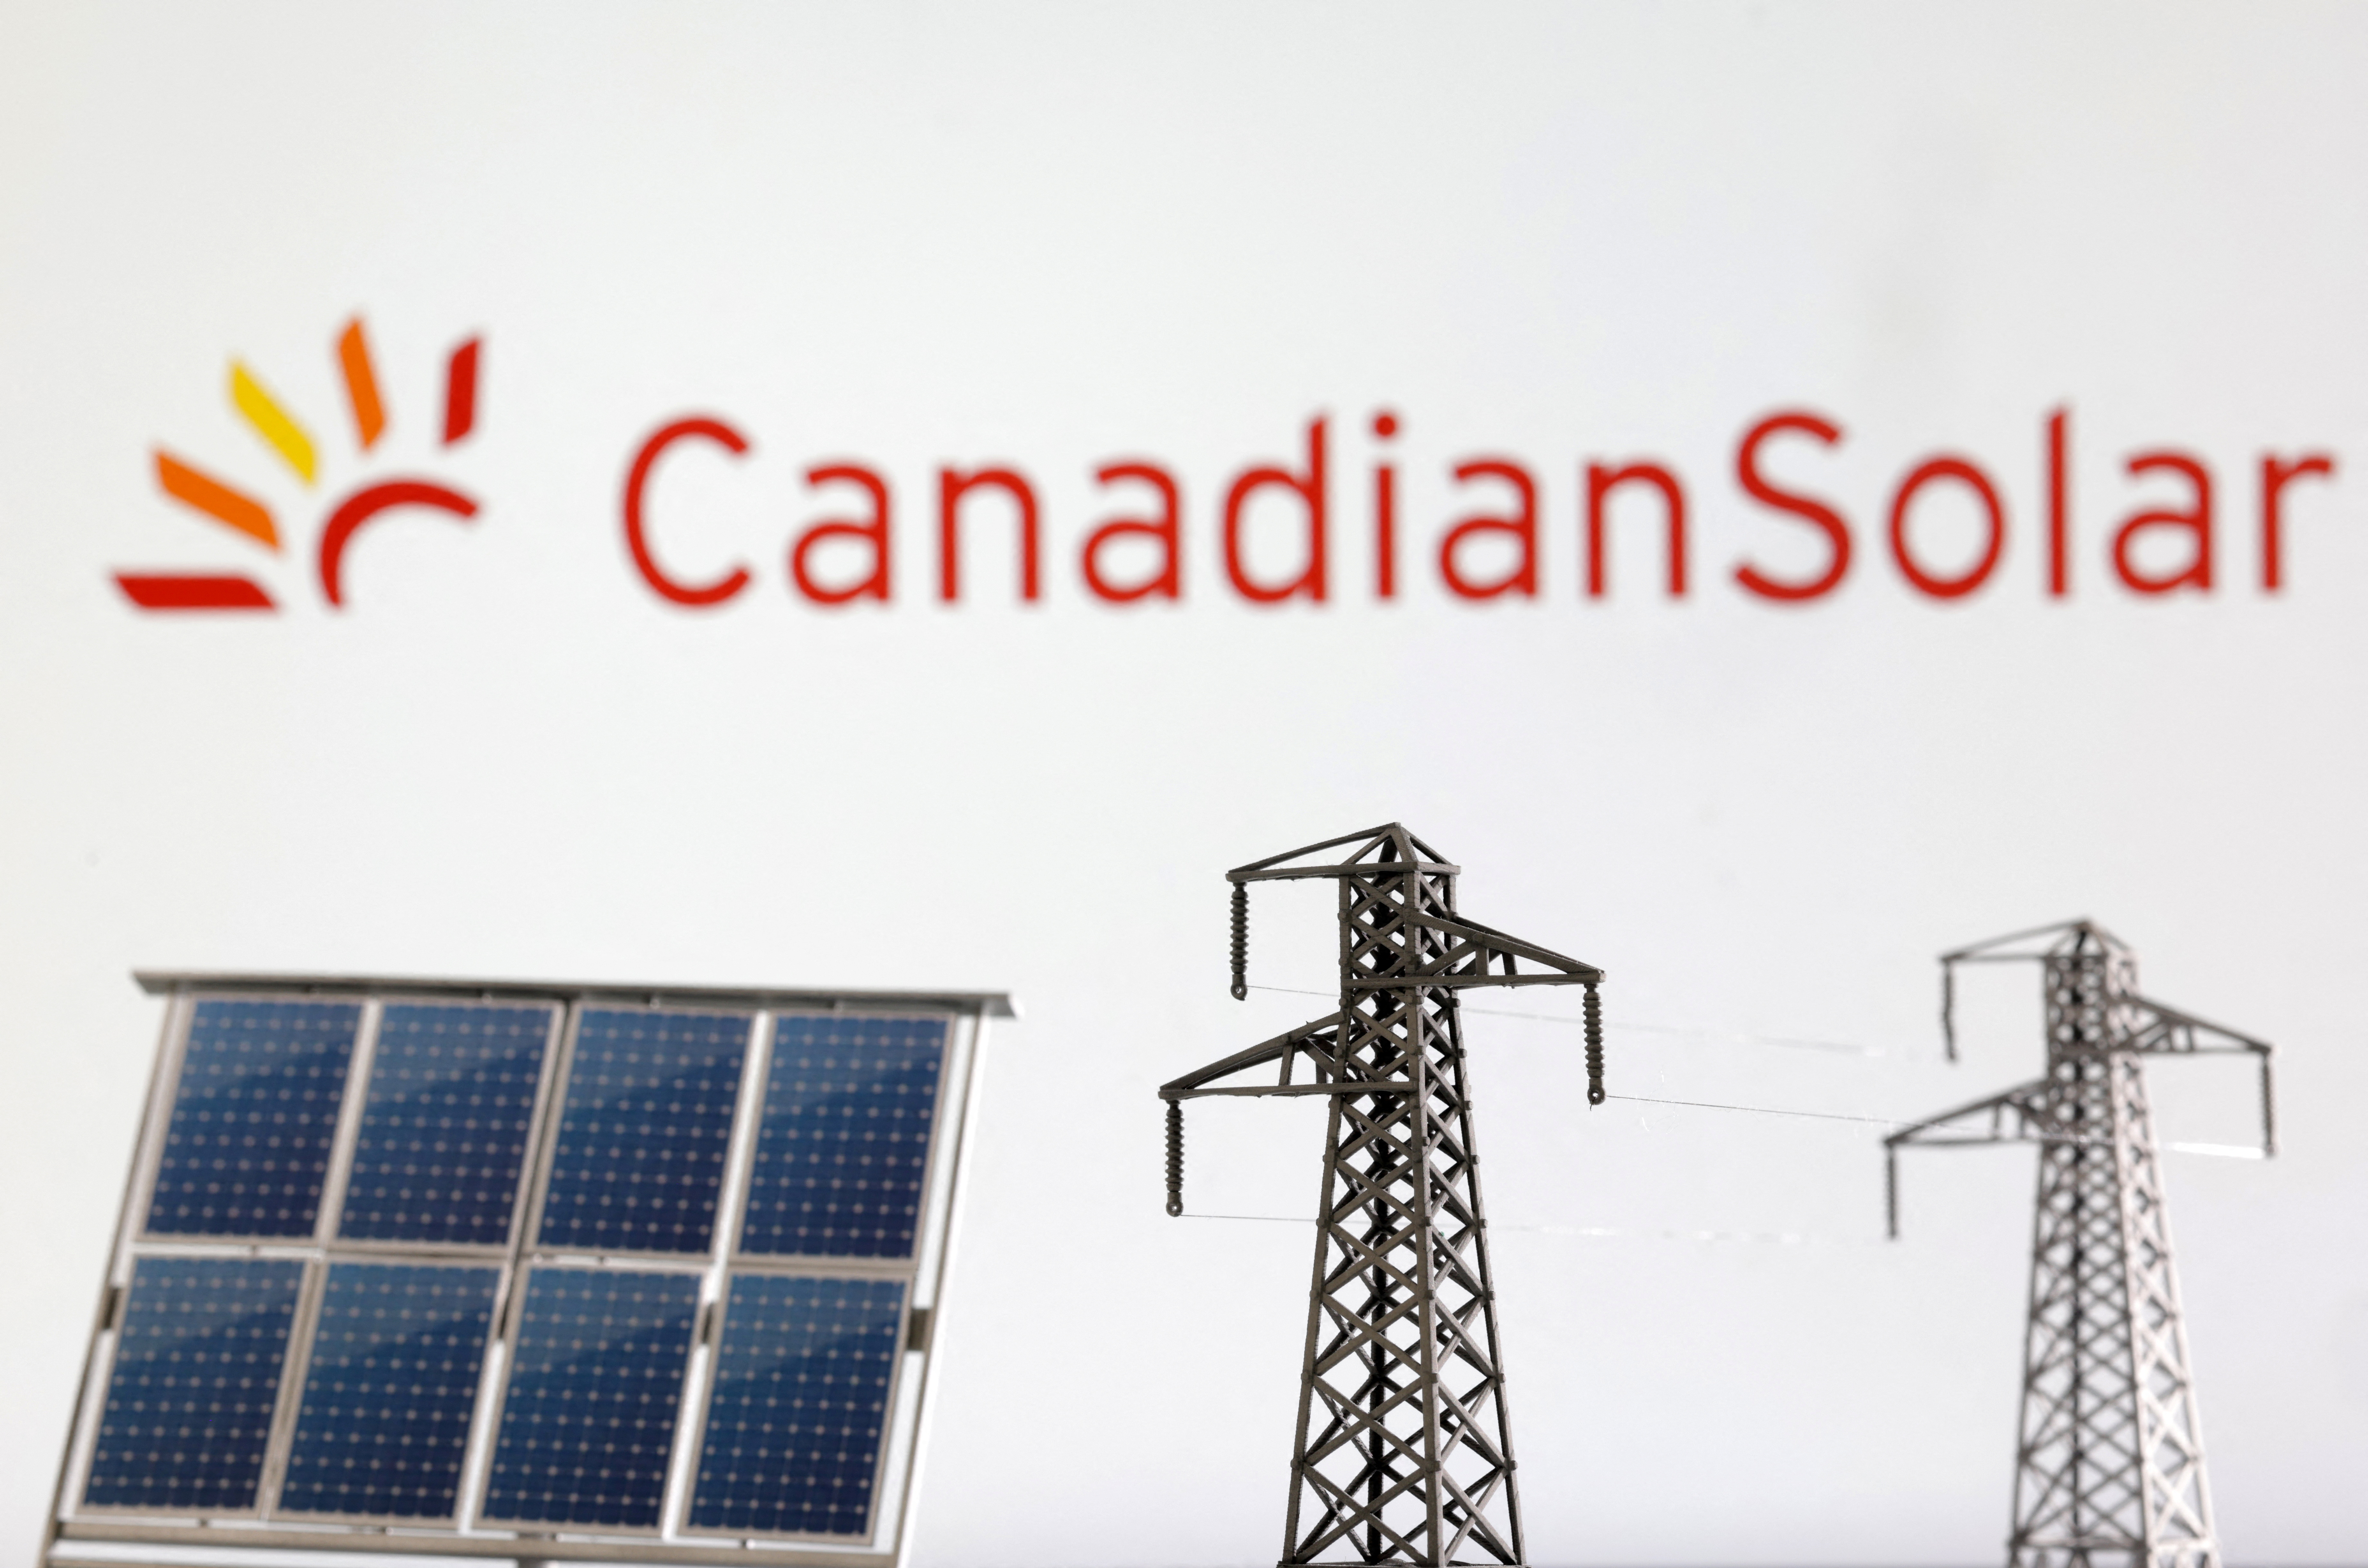 Illustration shows Canadian Solar logo